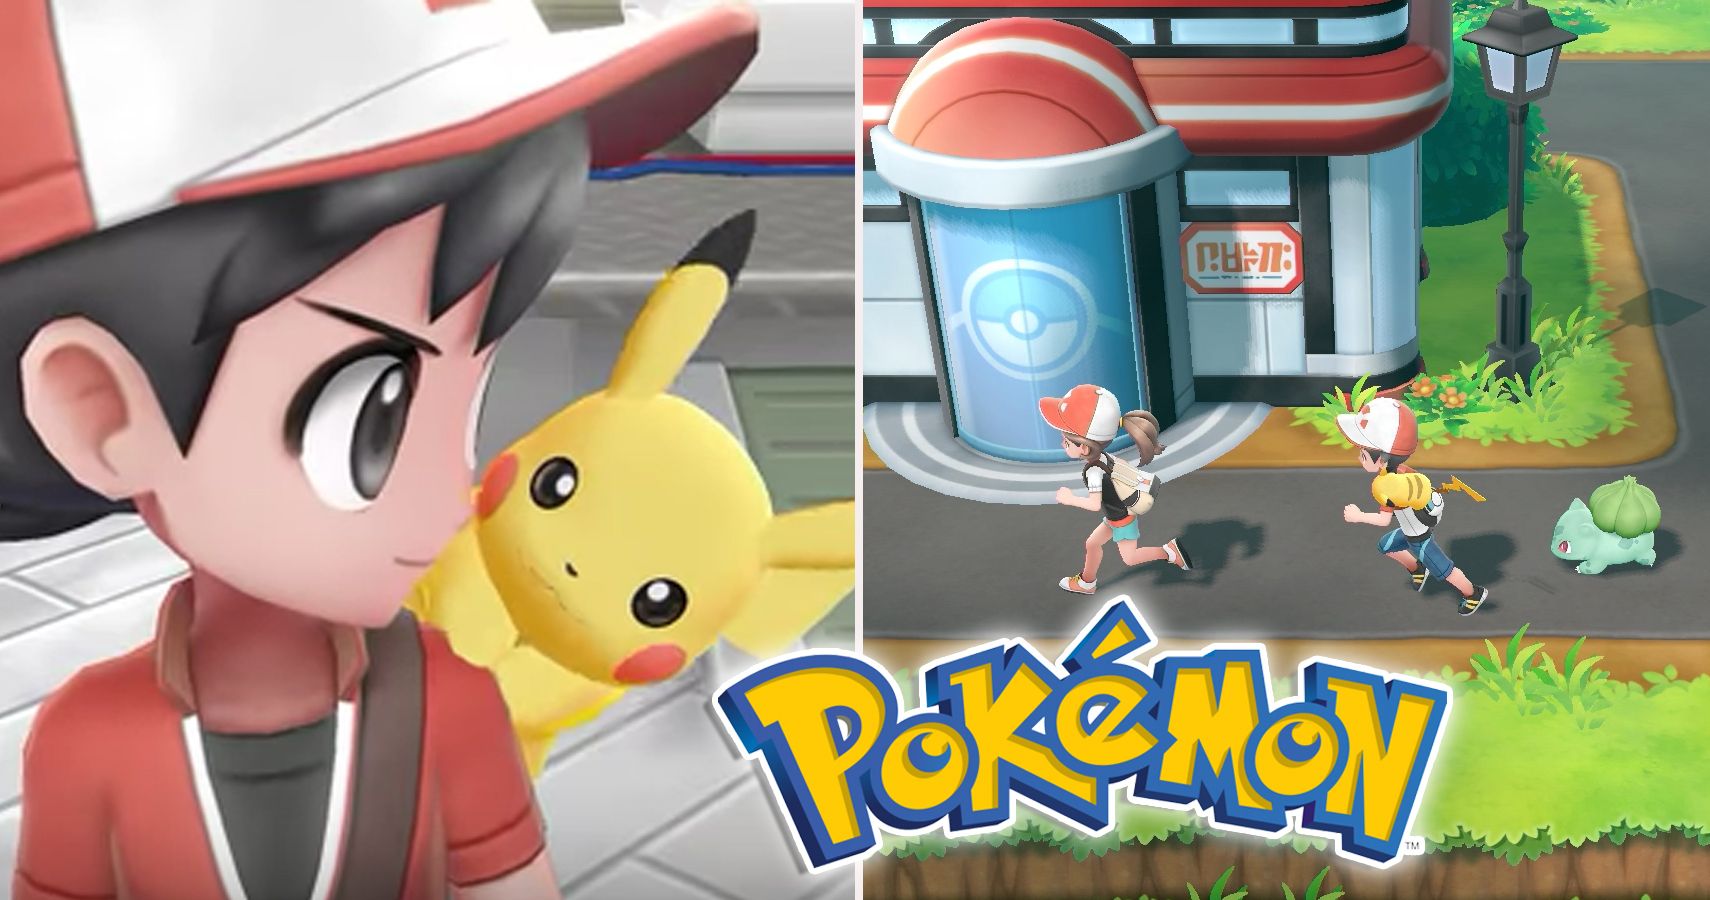 Pokémon leaks are inspiring fan art and Nintendo seems surprisingly chill -  Polygon